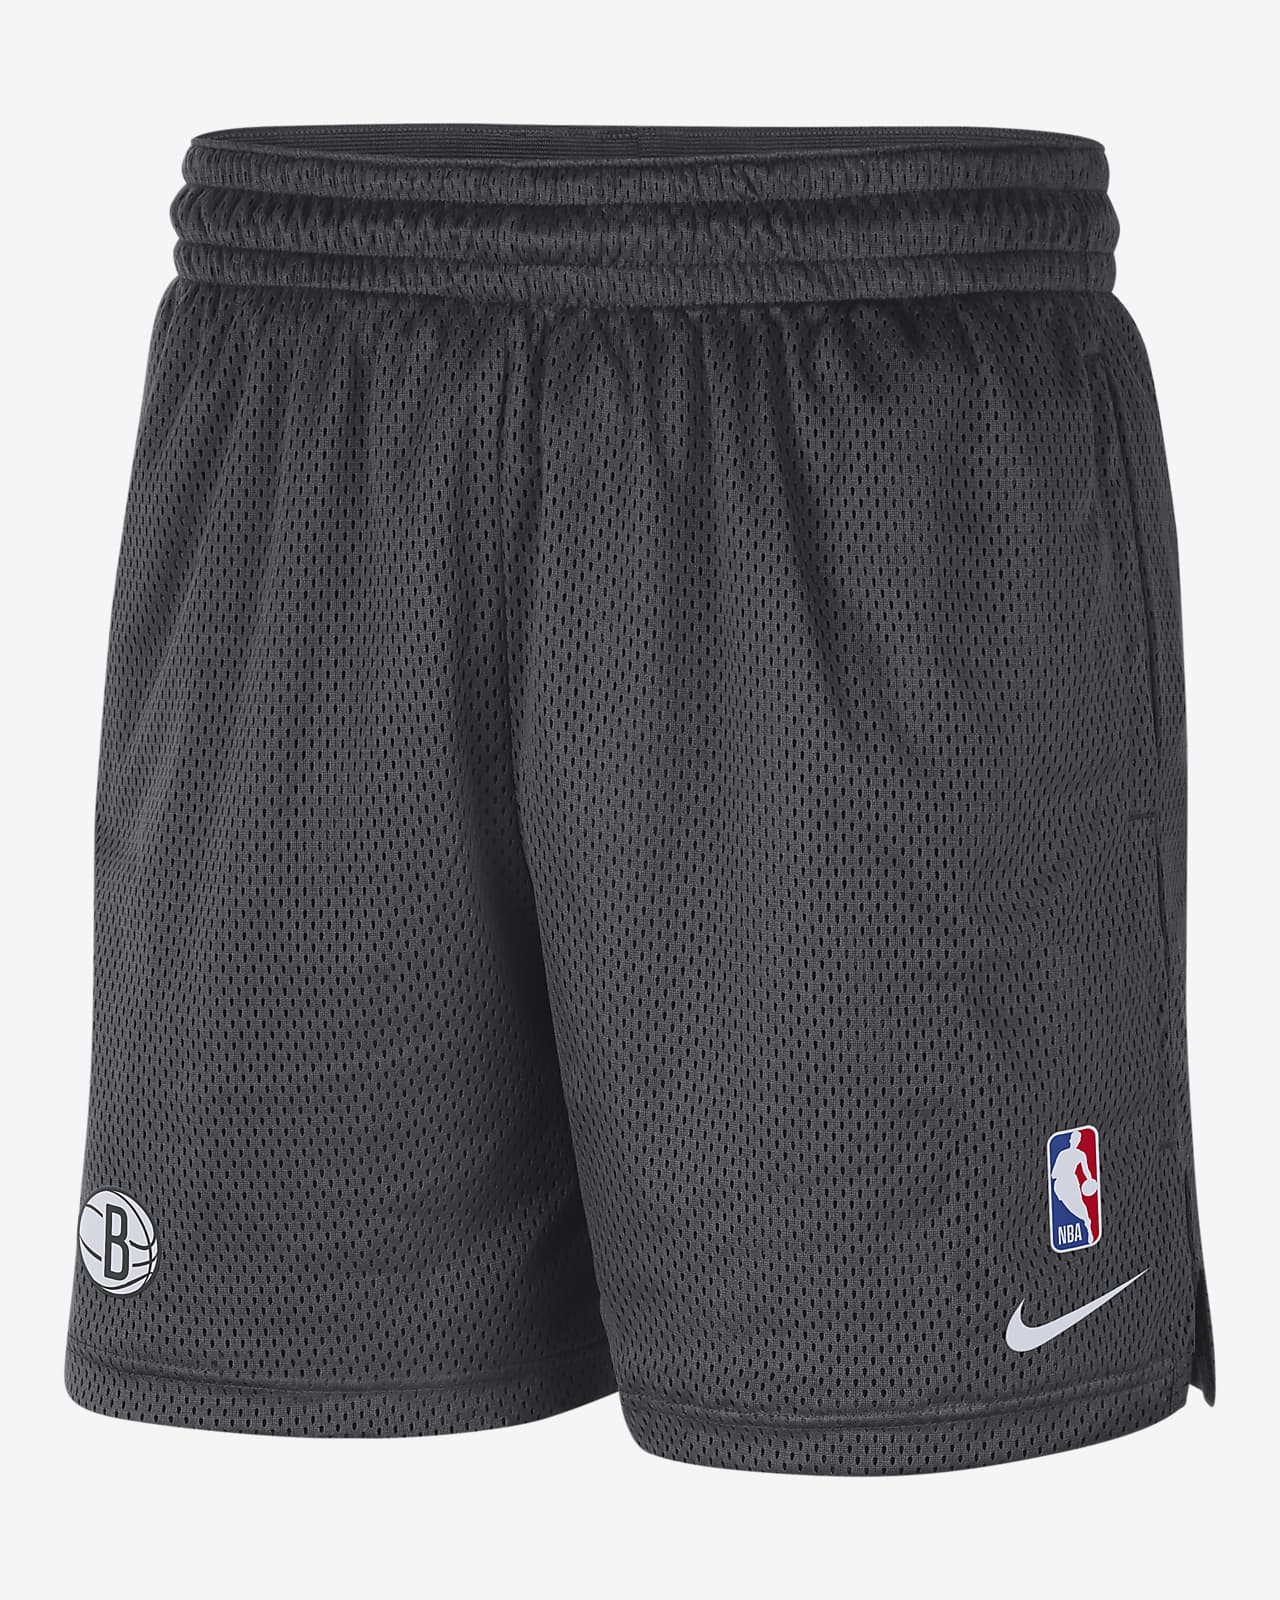 Brooklyn Nets NBA Pants for sale